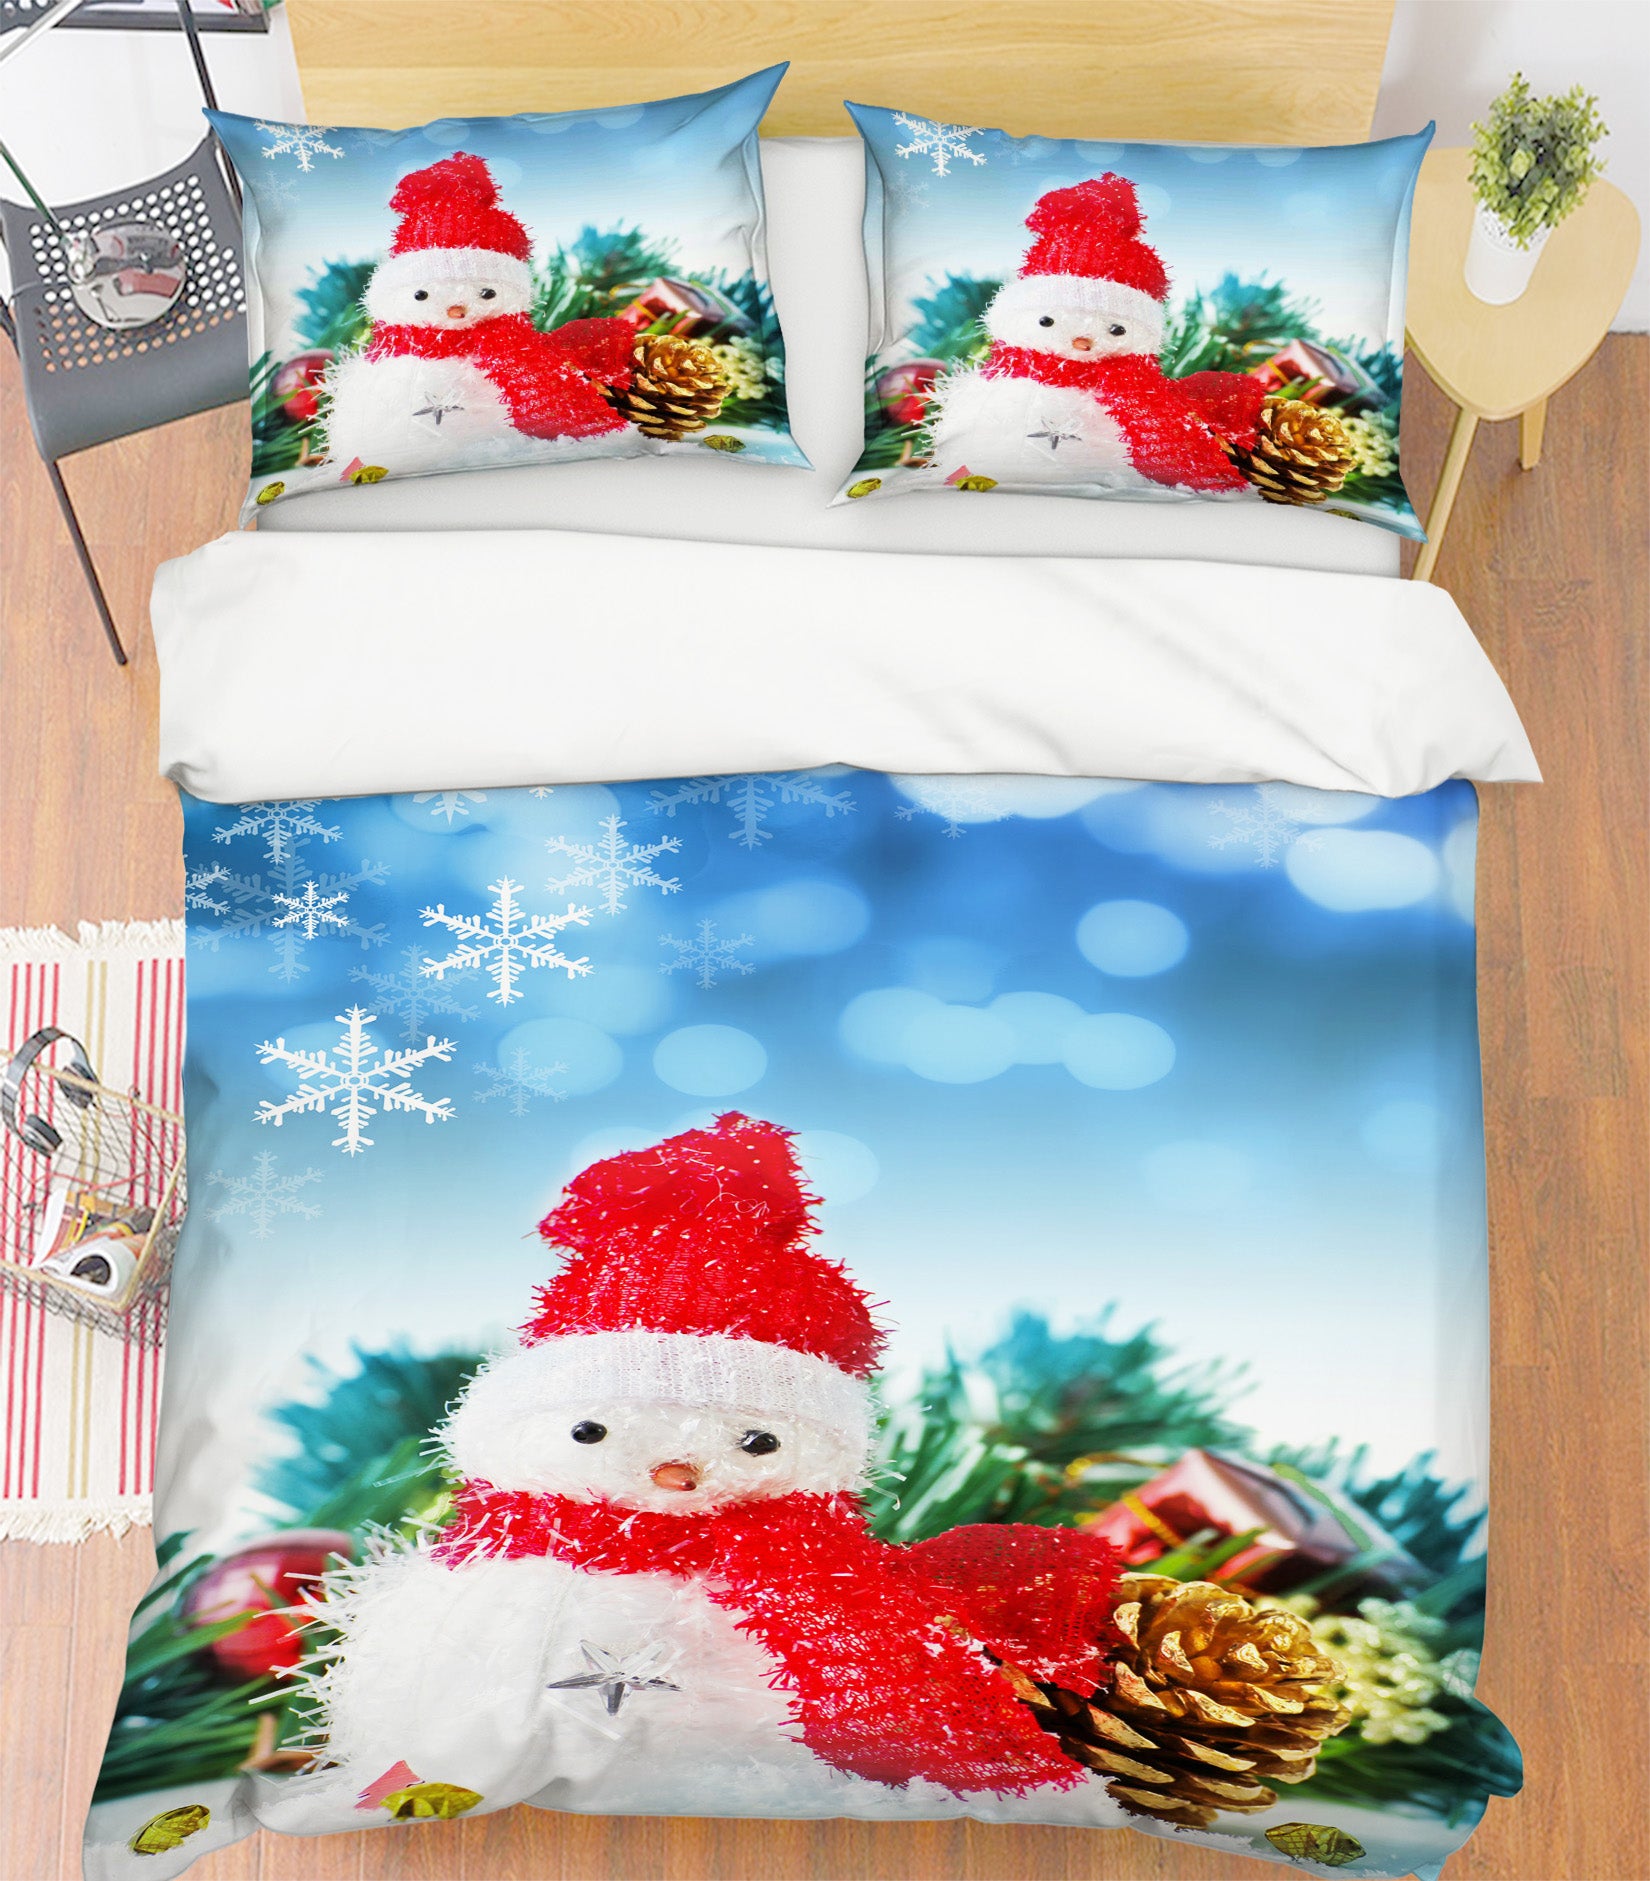 3D Snowman Doll 52230 Christmas Quilt Duvet Cover Xmas Bed Pillowcases